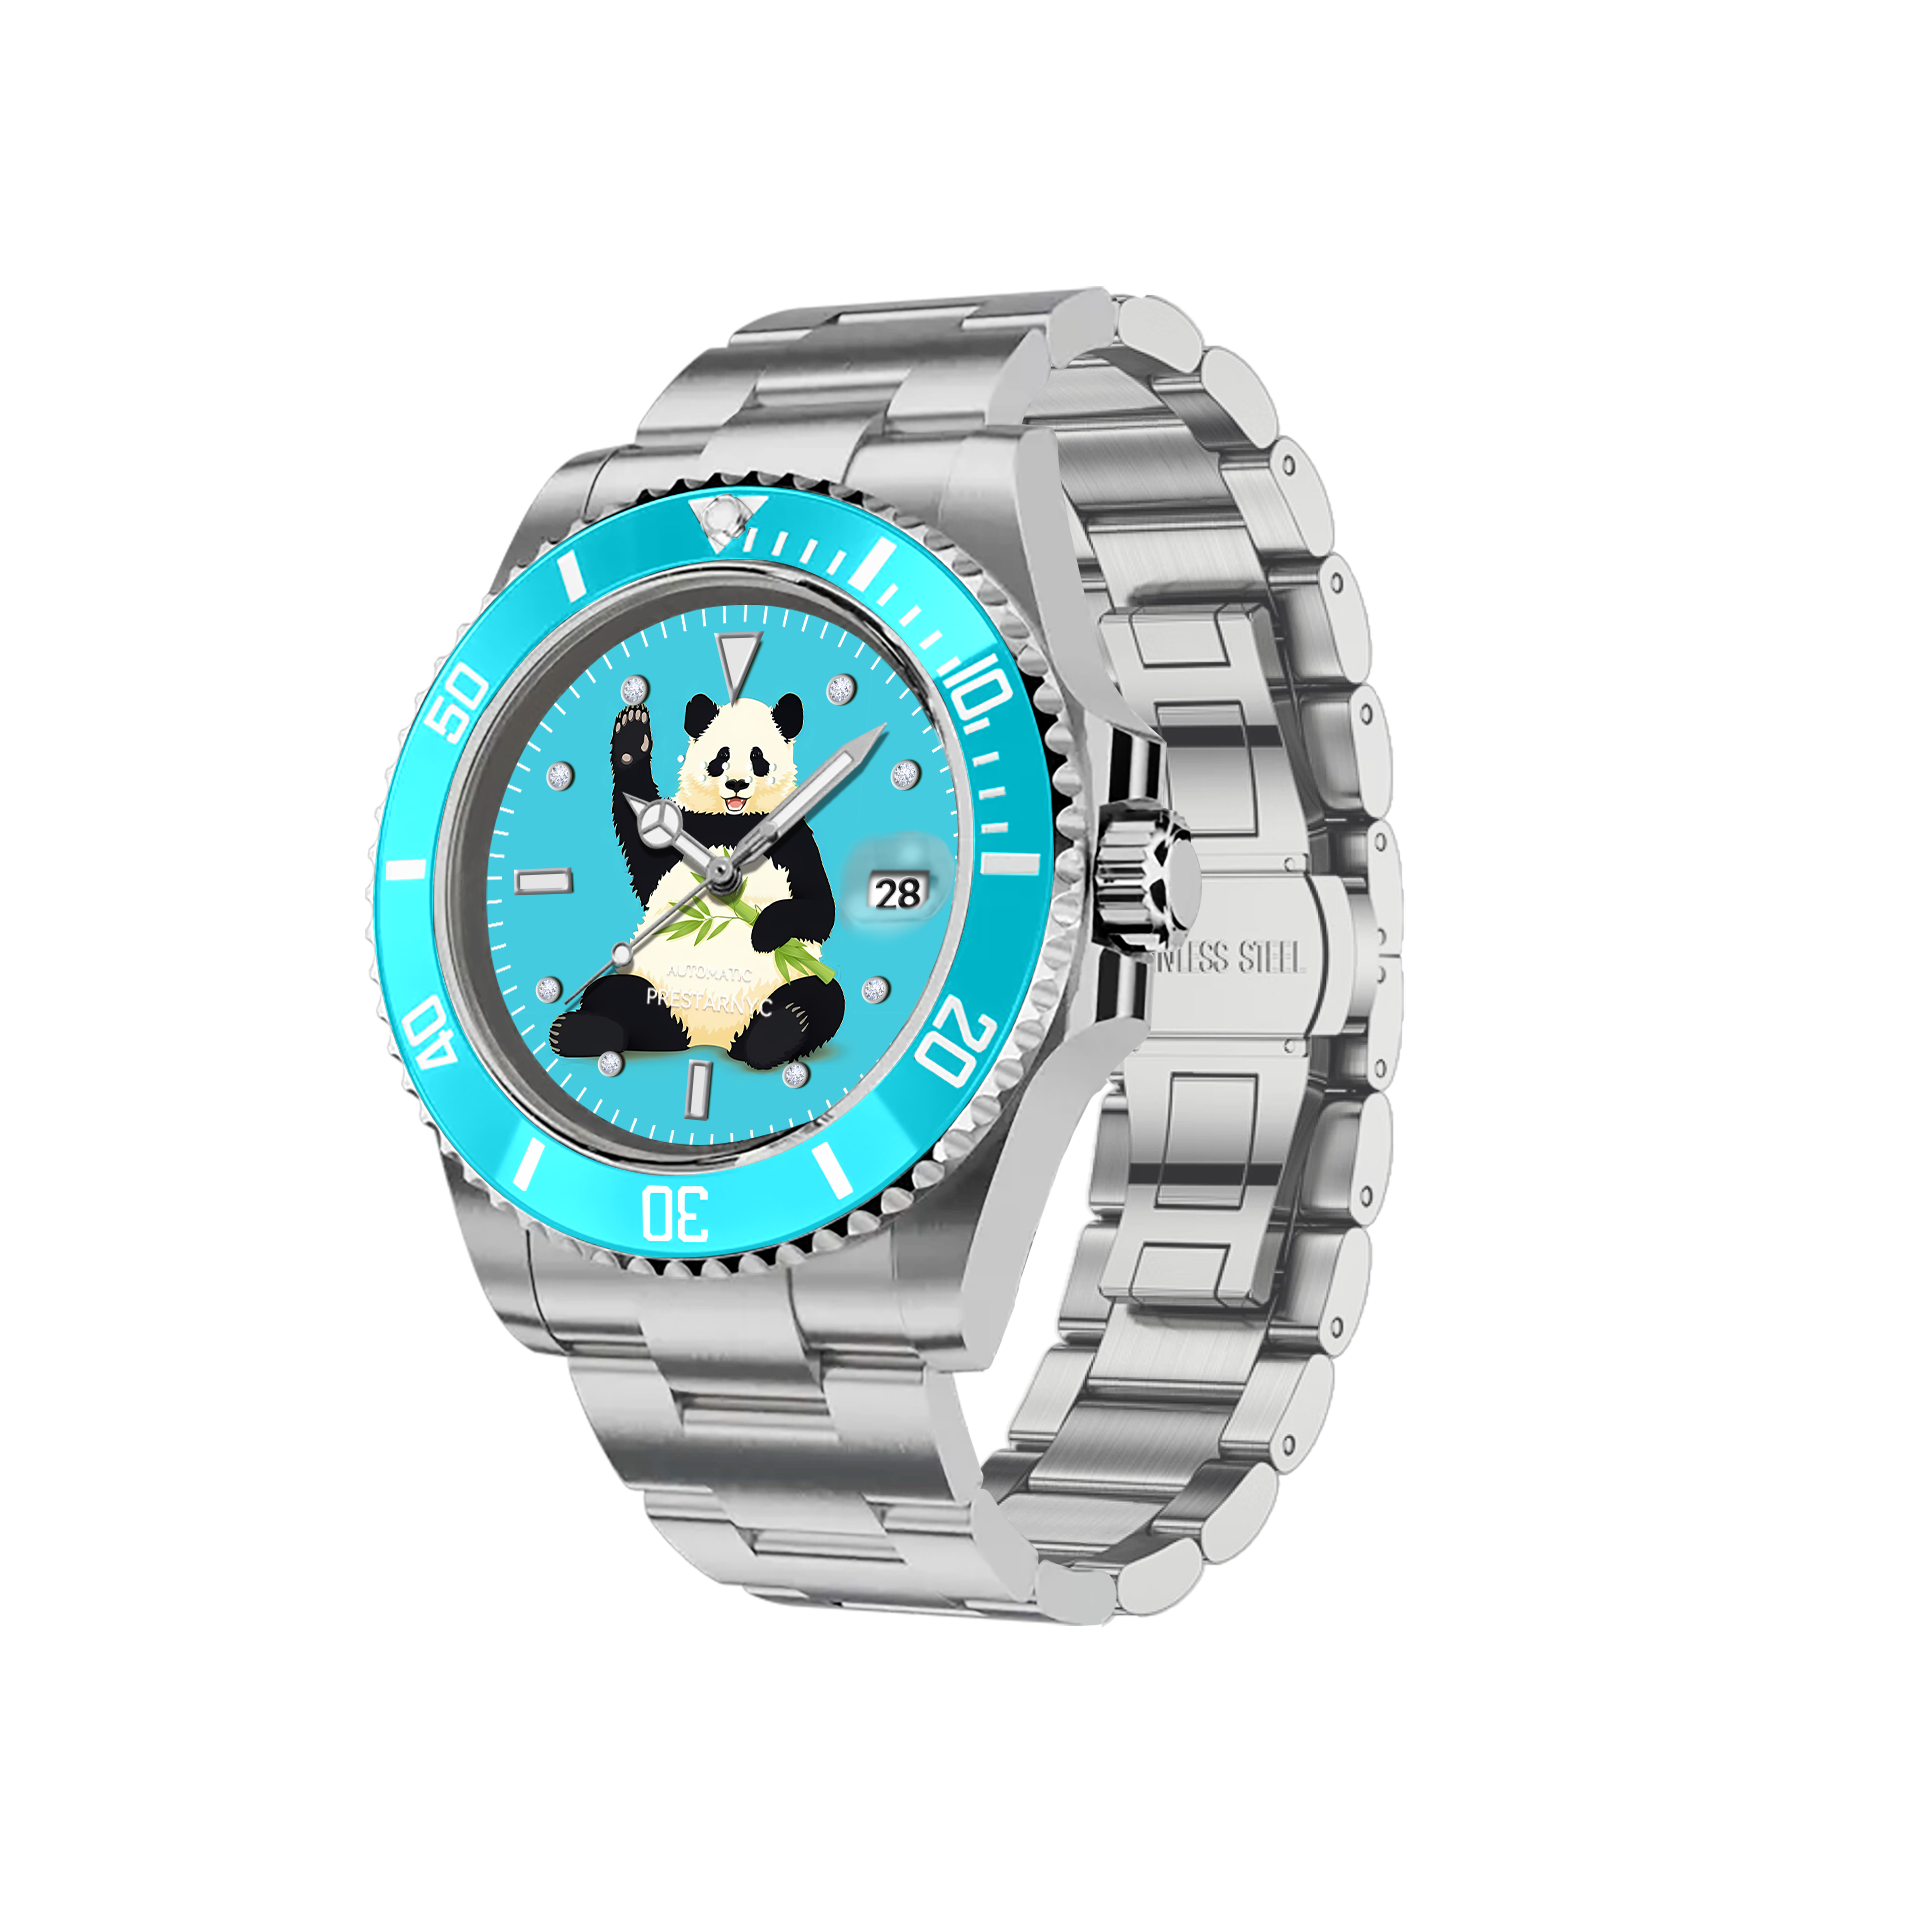 Prestar NYC Aquaman Initial Mechanical Watch (Bamboo Bliss Panda)